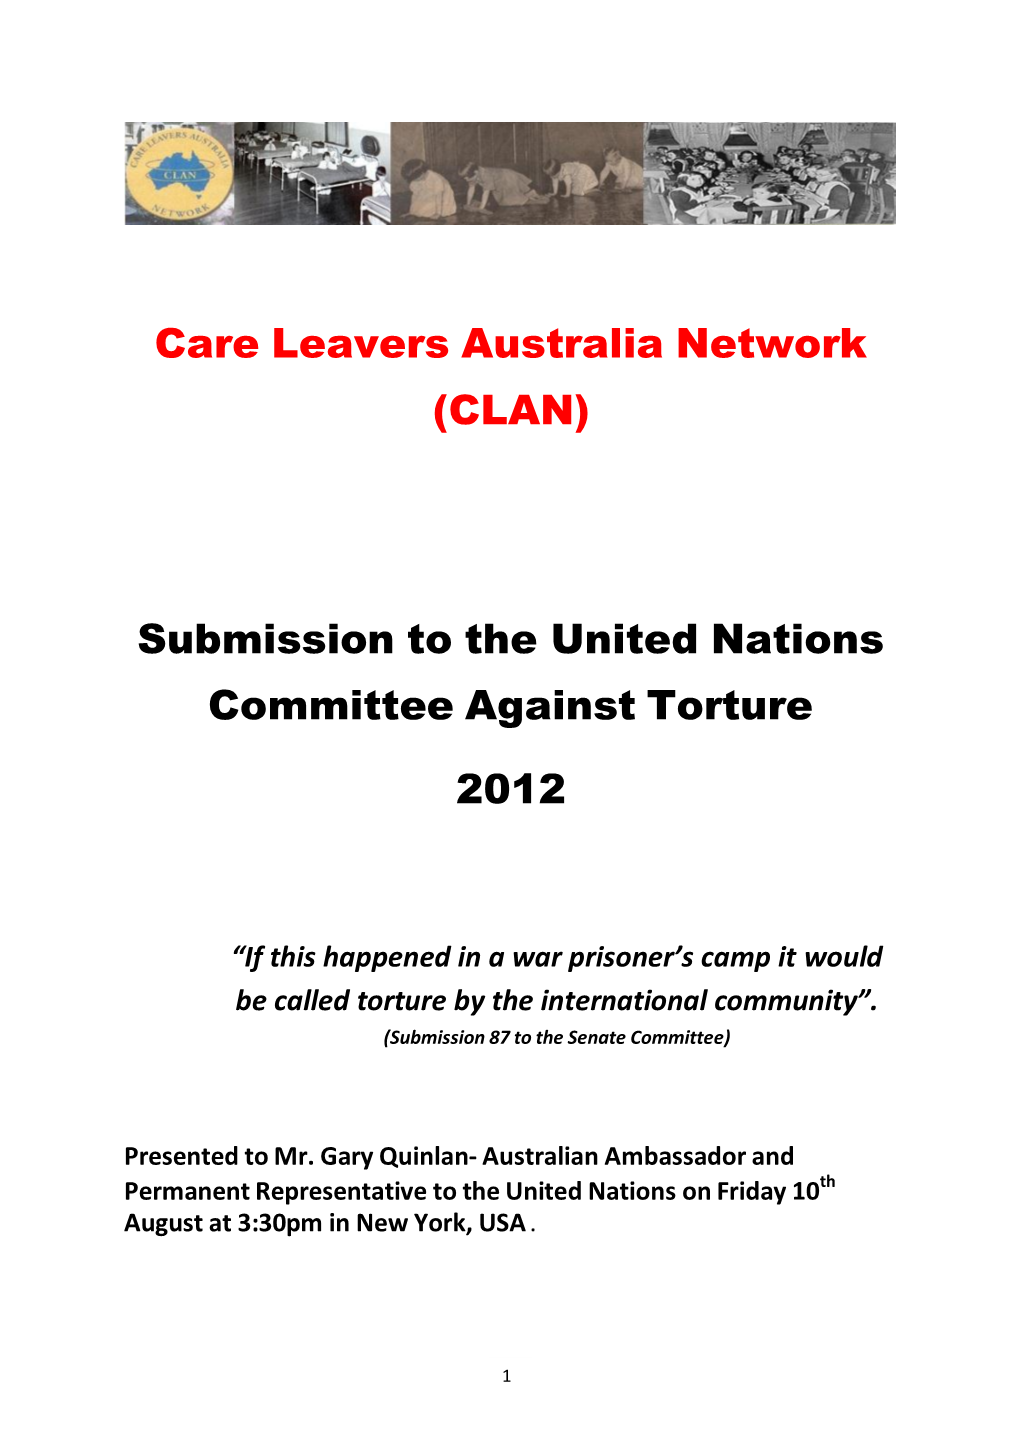 Care Leavers Australia Network (CLAN)